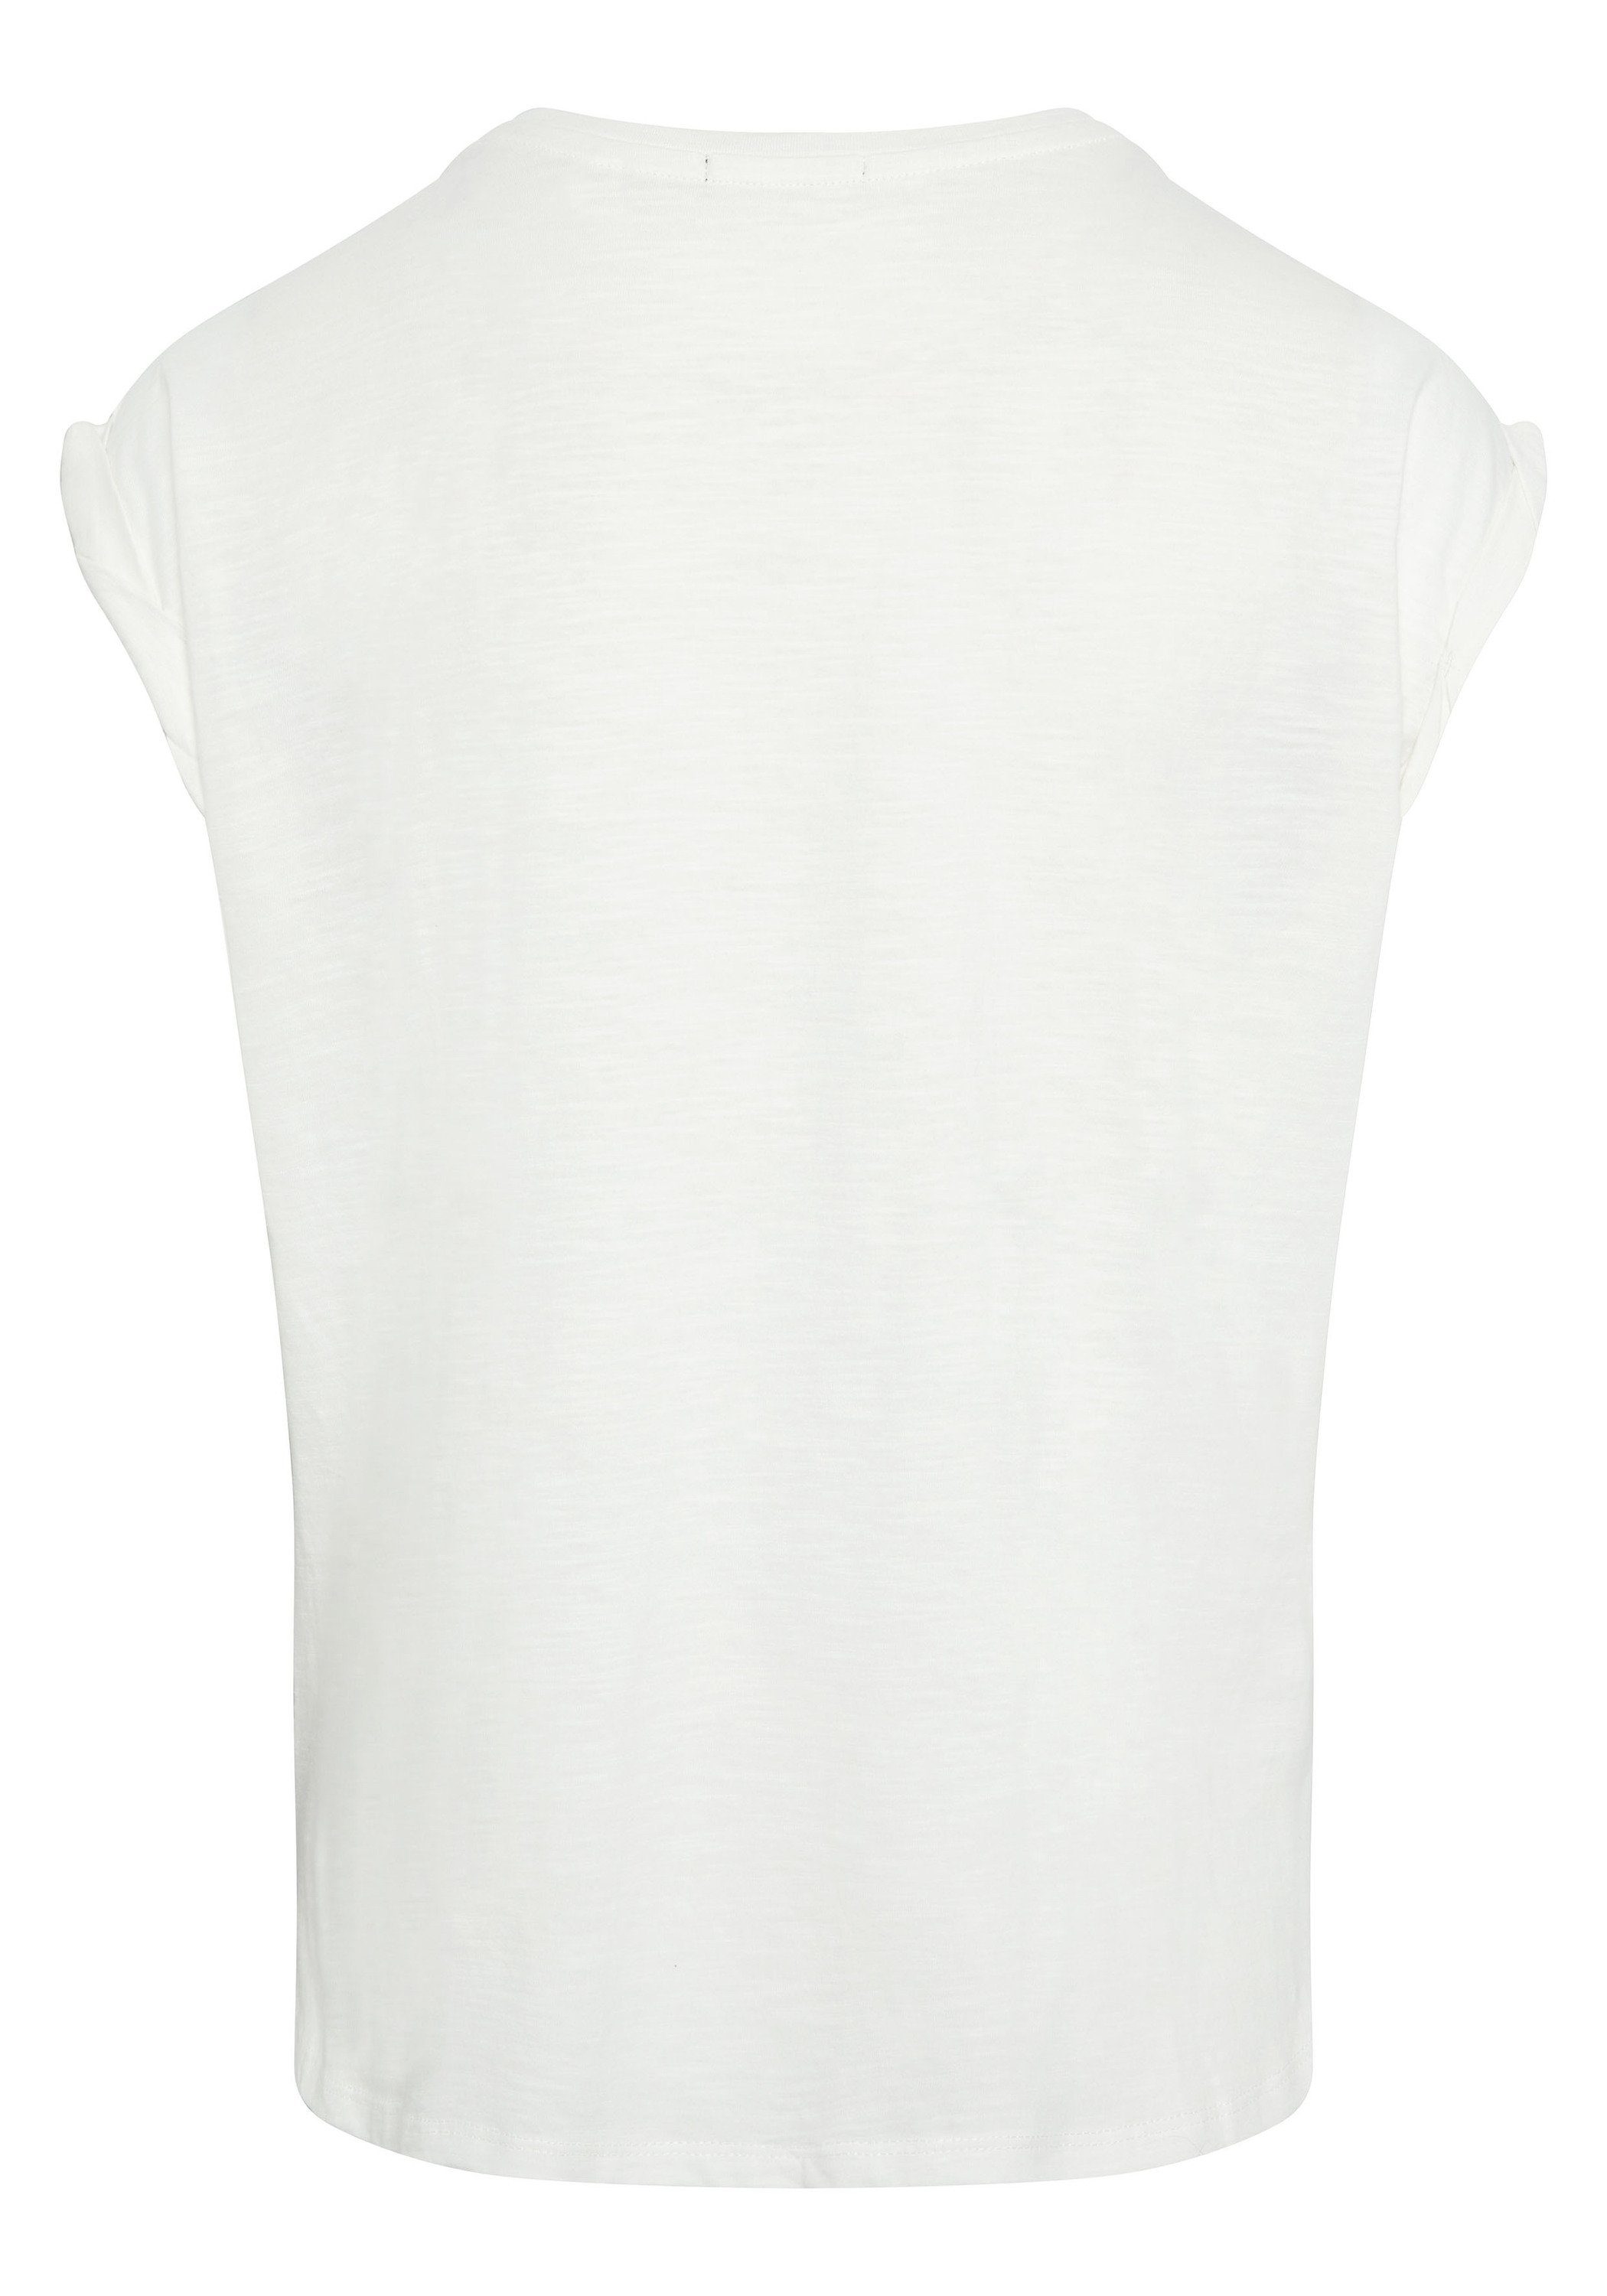 Print-Shirt Star T-Shirt 1 mit White Fotoprint 11-4202 Chiemsee